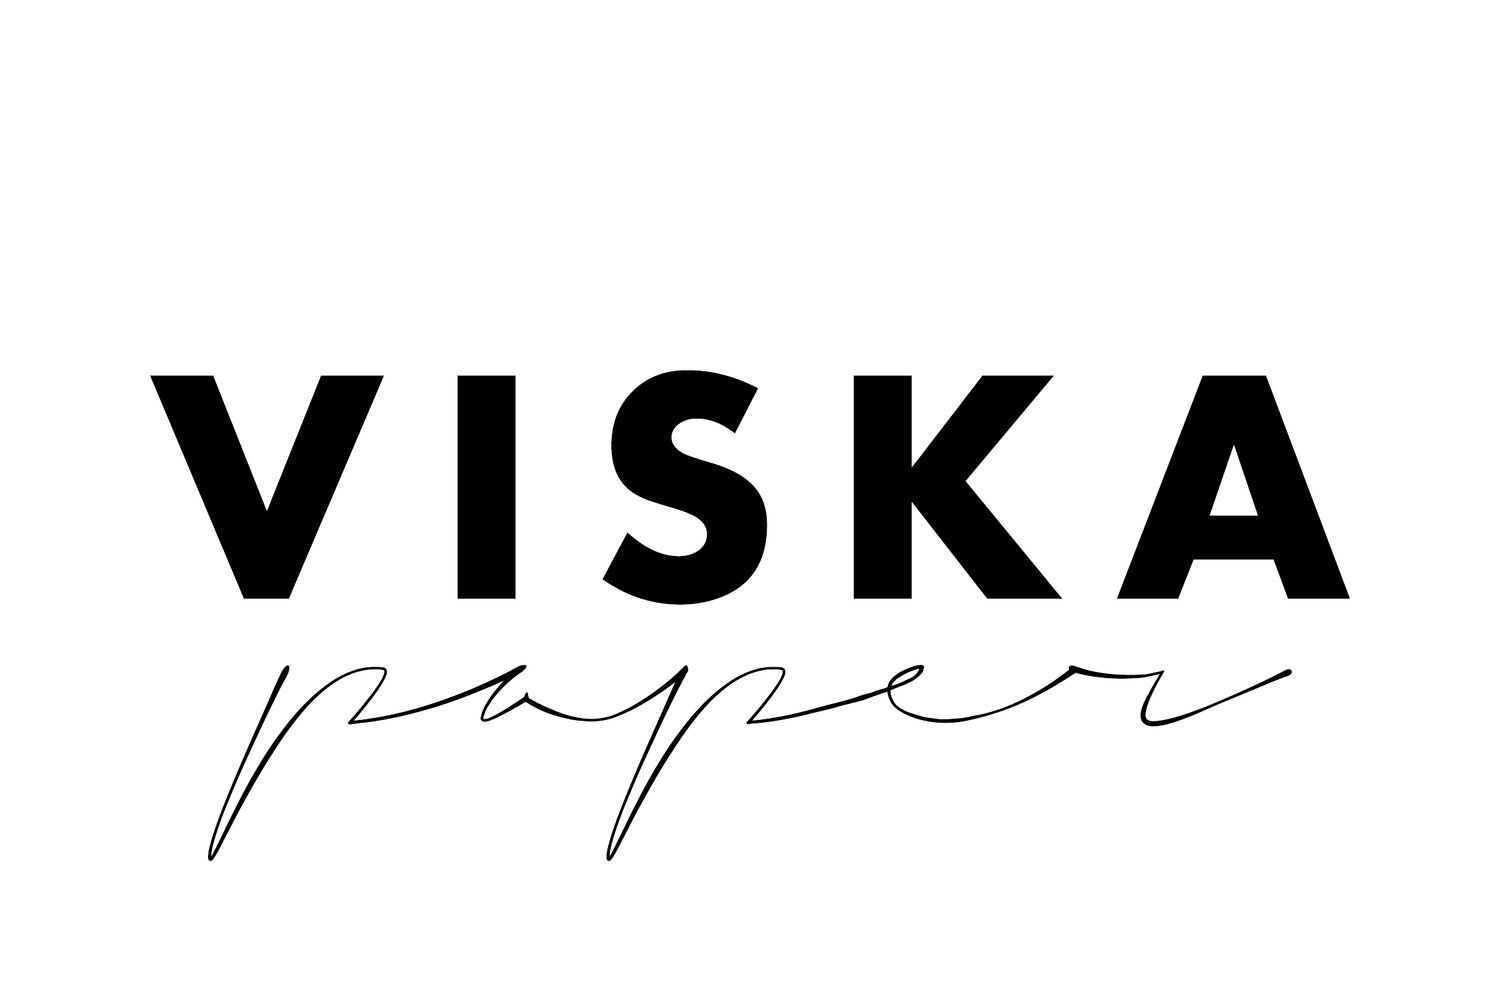 VISKA paper